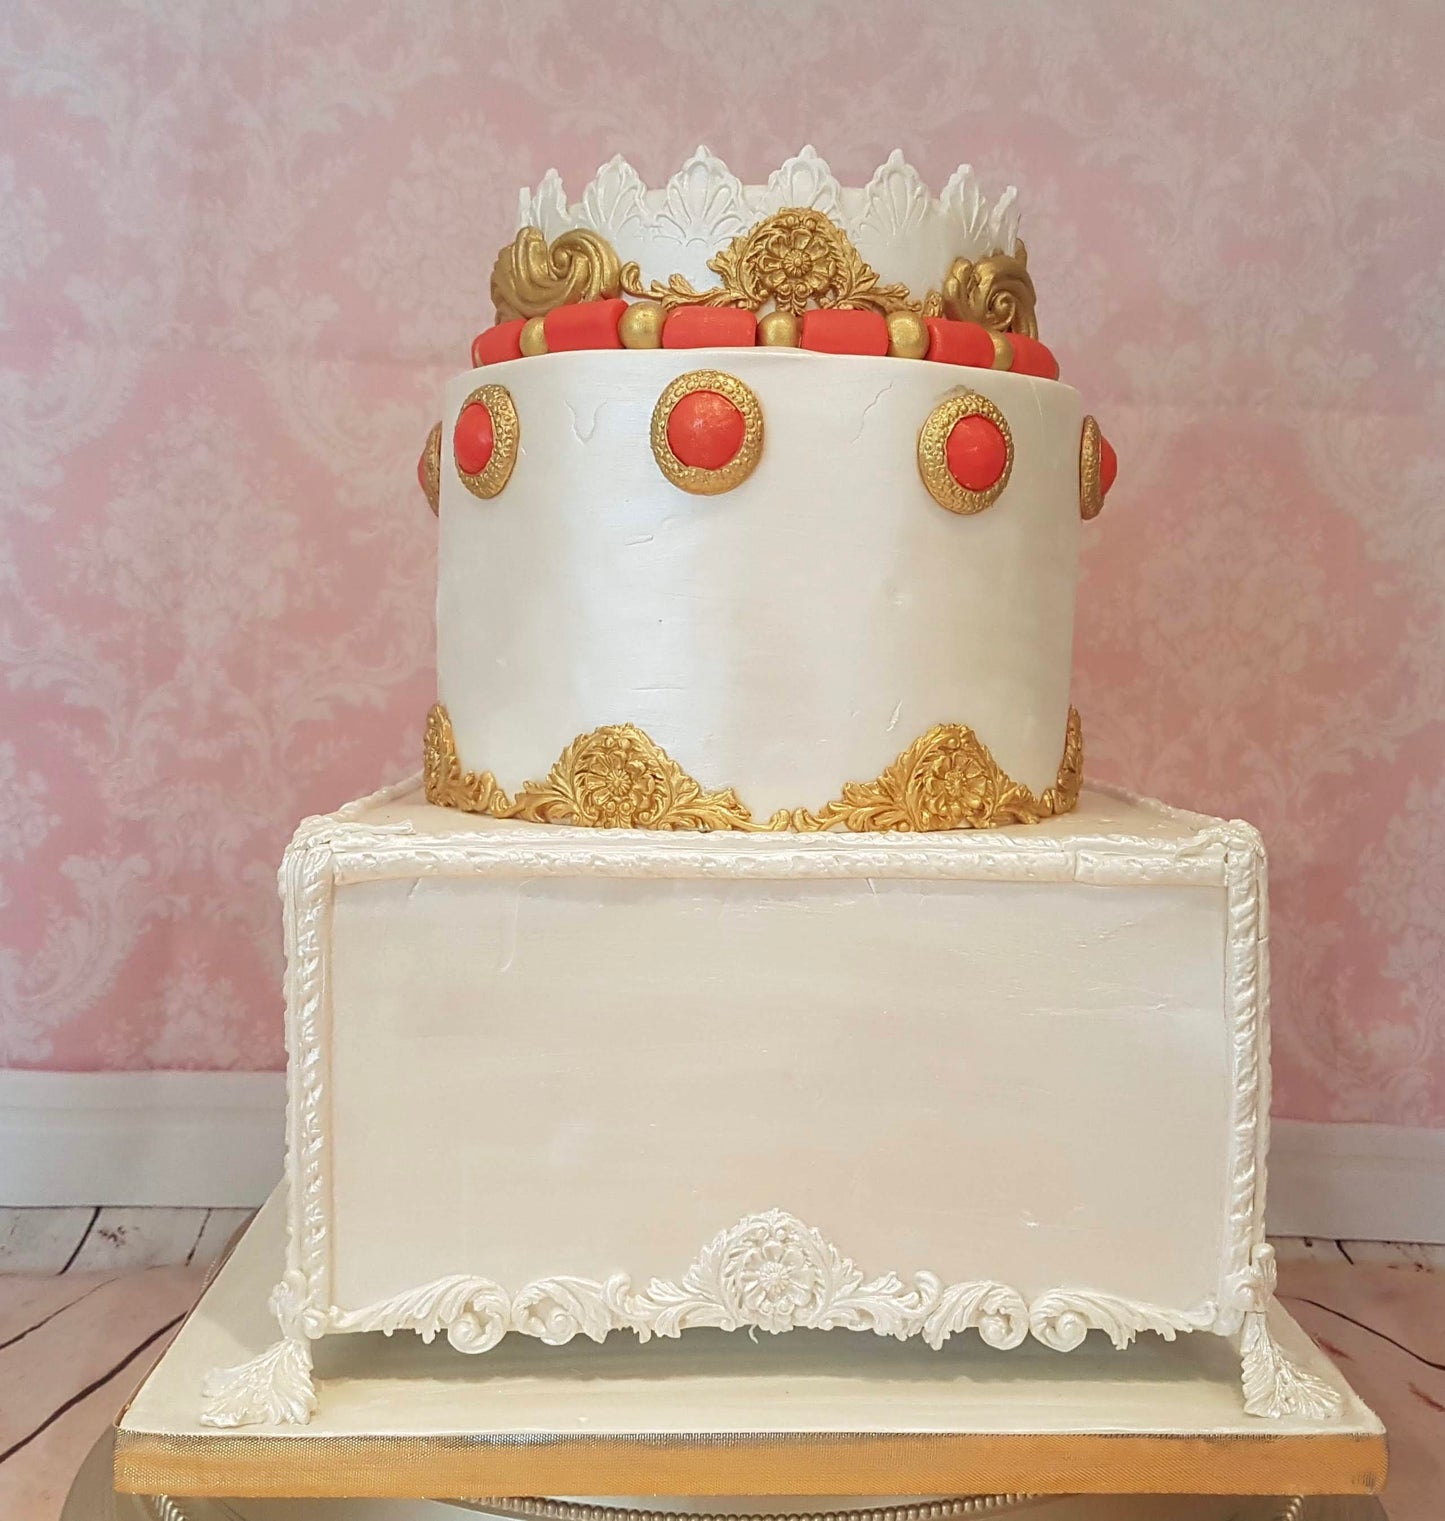 Two-tier traditional fondant wedding cake